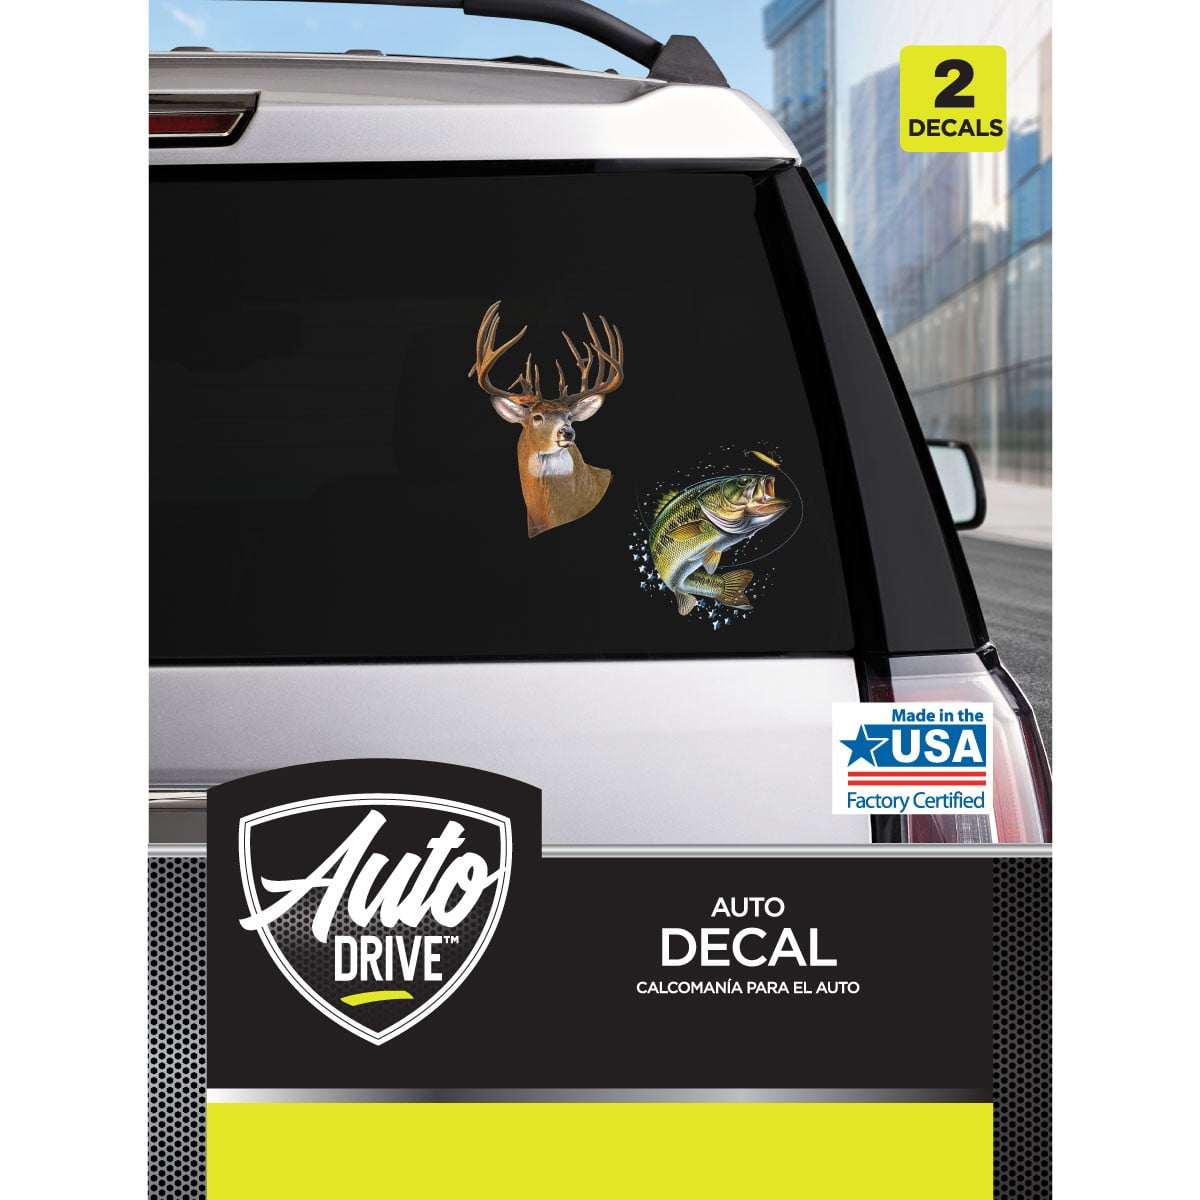 Auto Drive Deer/Bass Decals Set of 2 Vinyl Car Stickers